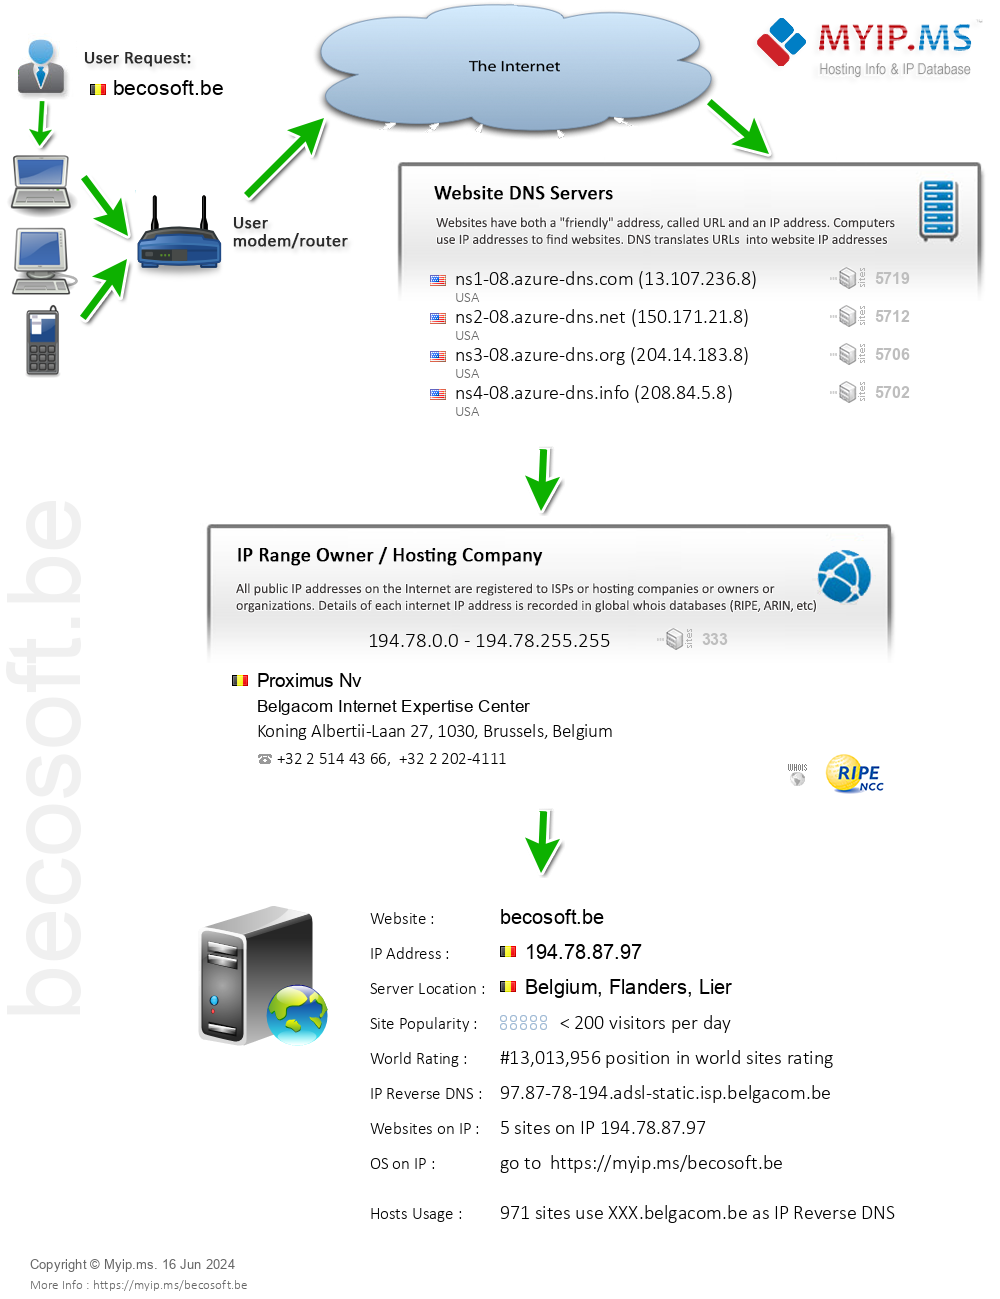 Becosoft.be - Website Hosting Visual IP Diagram